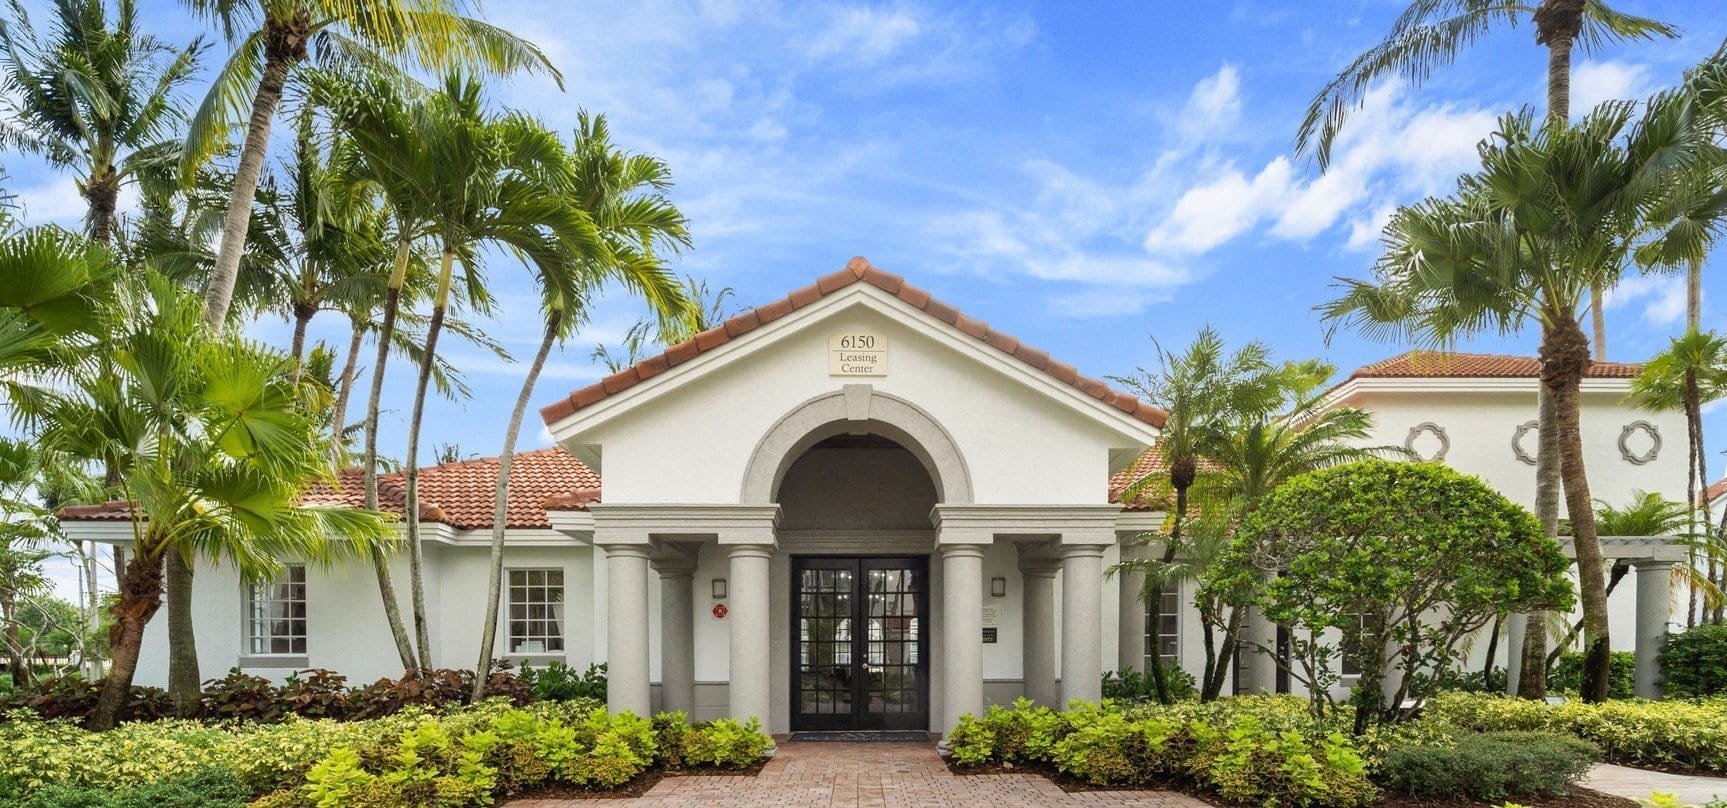 Building entrance at Windsor Coral Springs, Coral Springs, FL